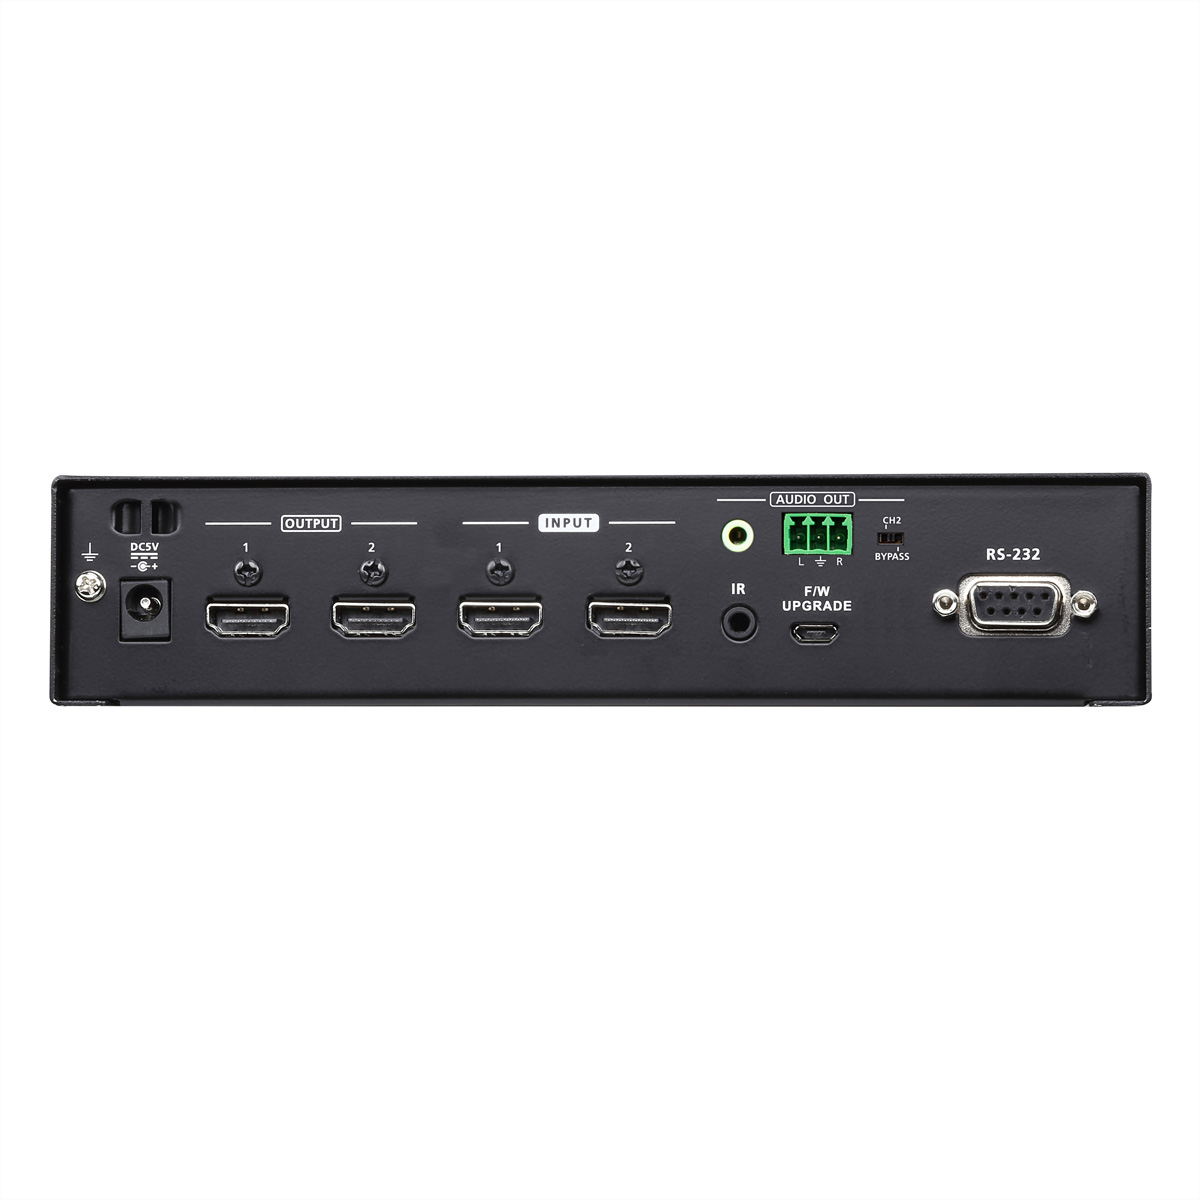 HDMI-Video-Matrix-Switch VM0202HB 2 True 4K HDMI 2 Audio/Video x Switch Matrix ATEN